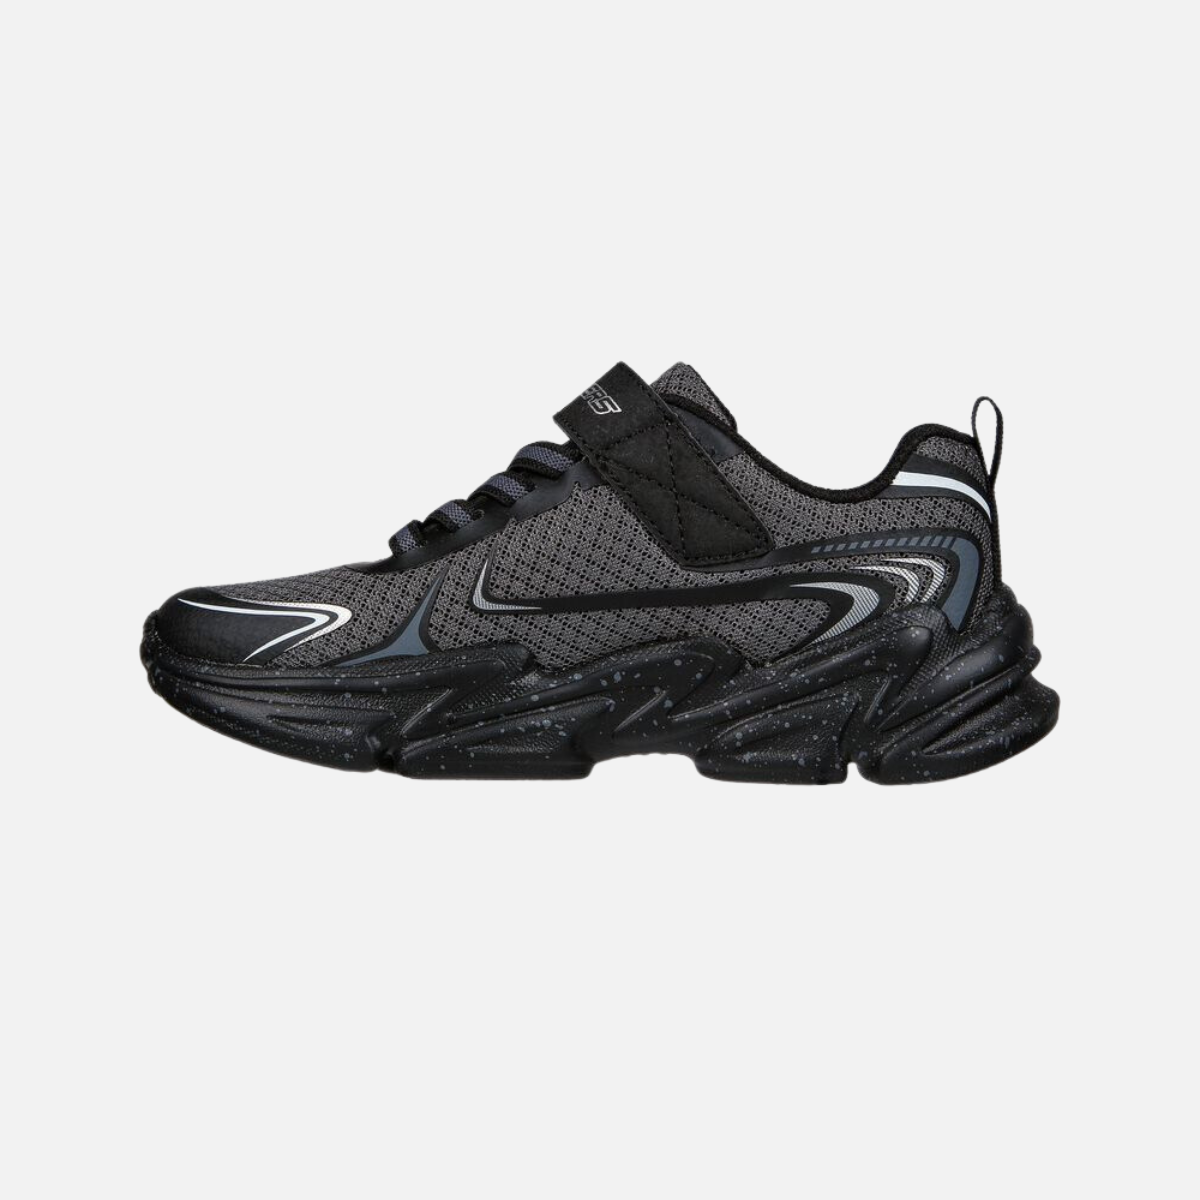 Skechers Wavetronic-Ravlor Kids Shoes (4-12 Year) -Charcoal/Black